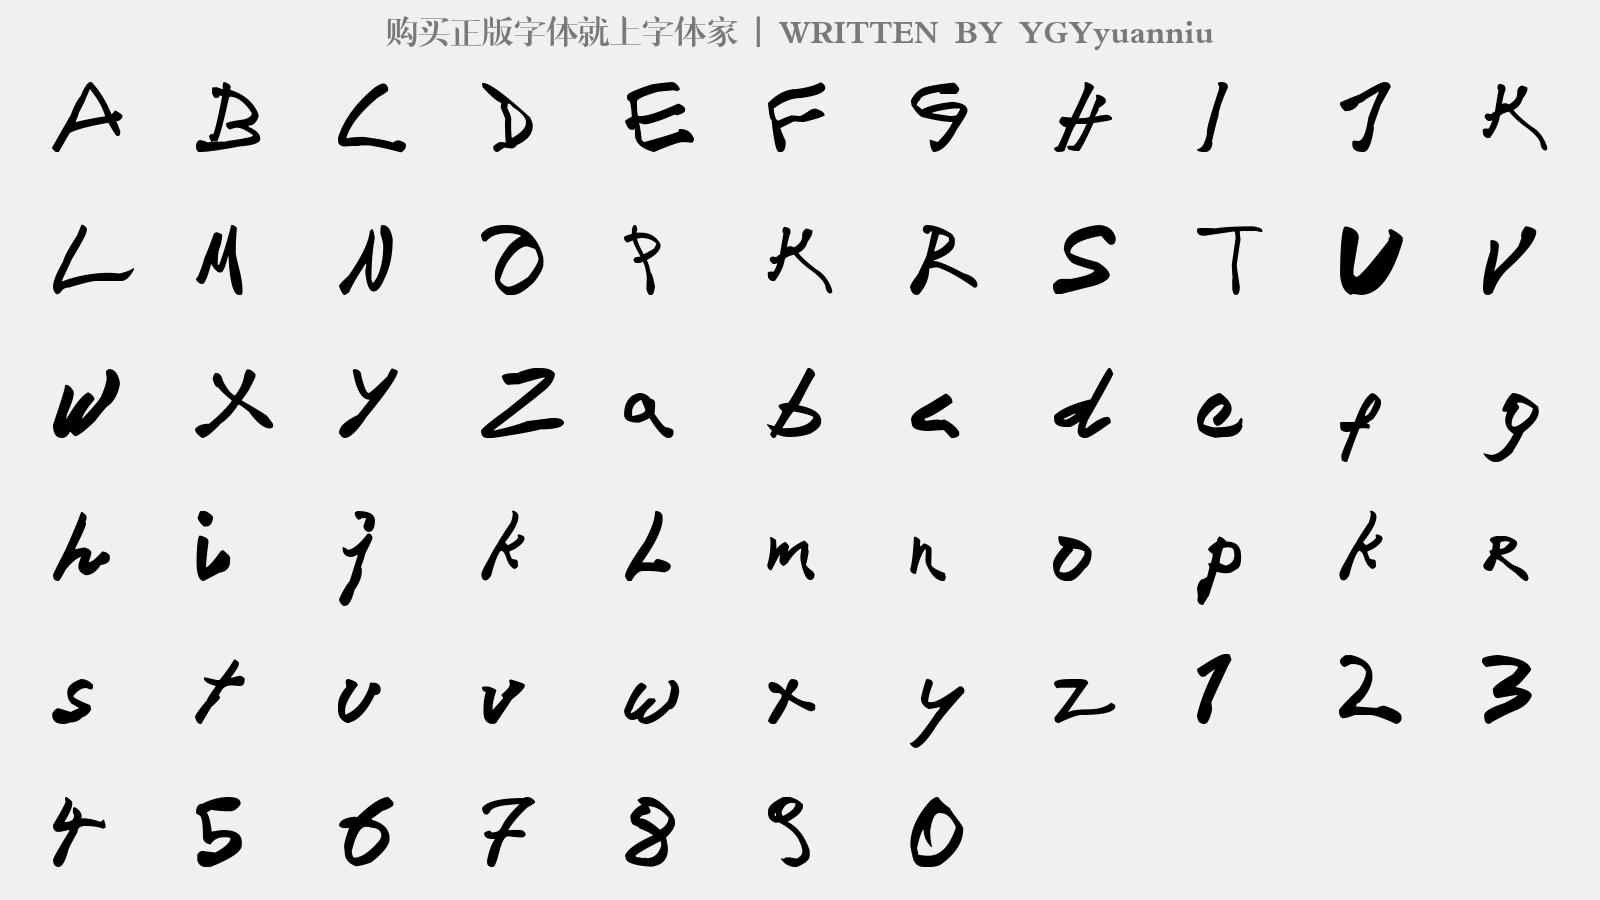 YGYyuanniu - 大写字母/小写字母/数字